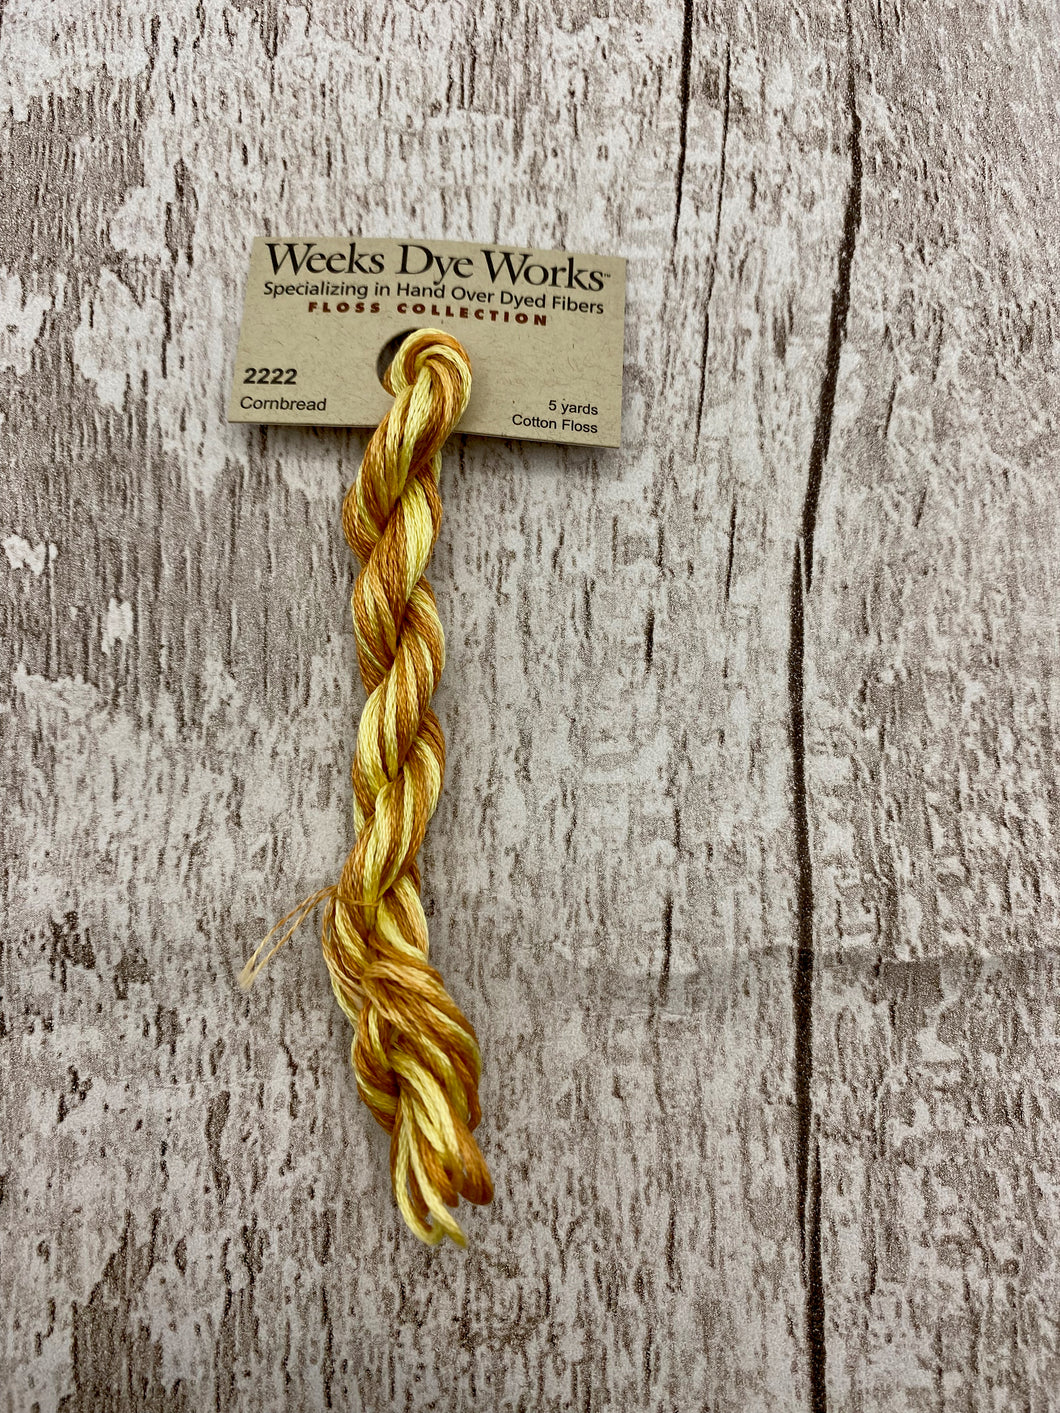 Cornbread (#2222) Weeks Dye Works, 6-strand cotton floss